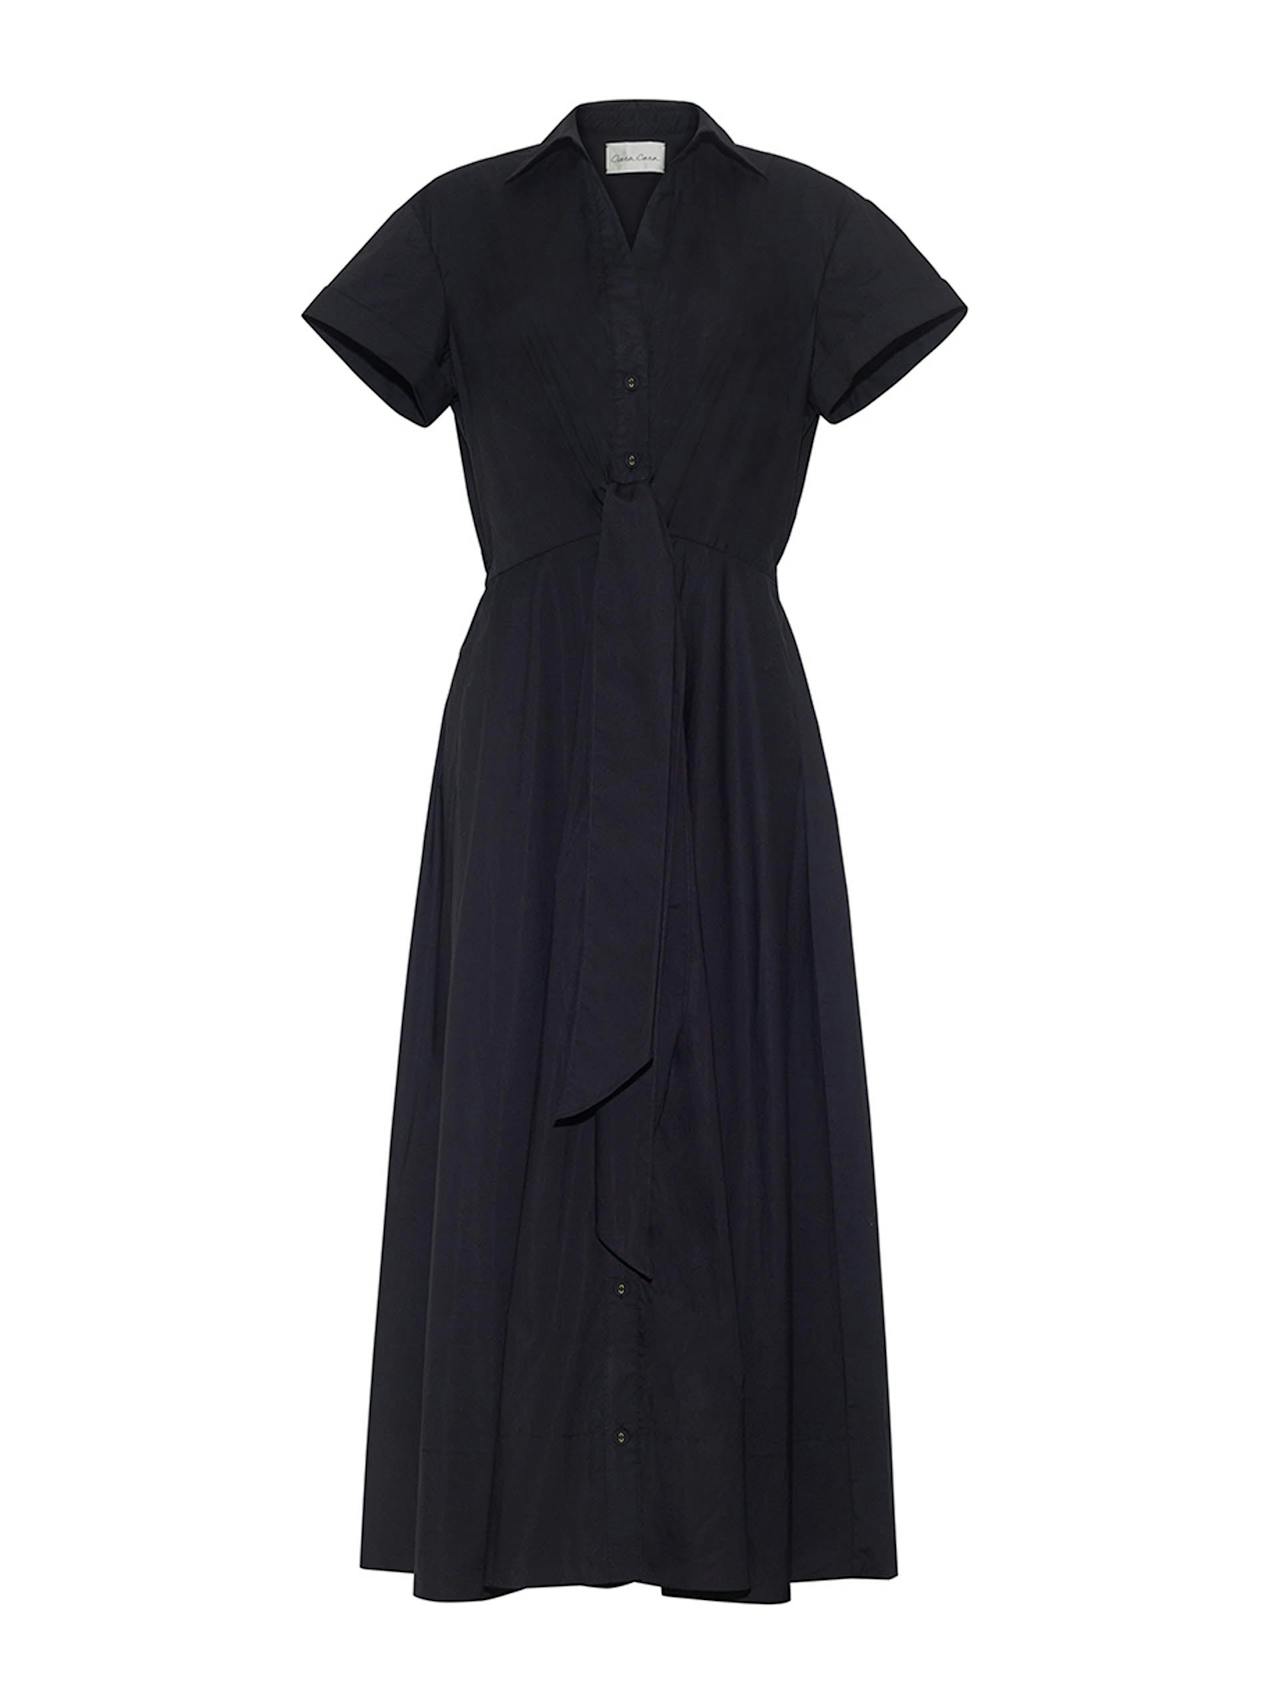 Black Asbury dress